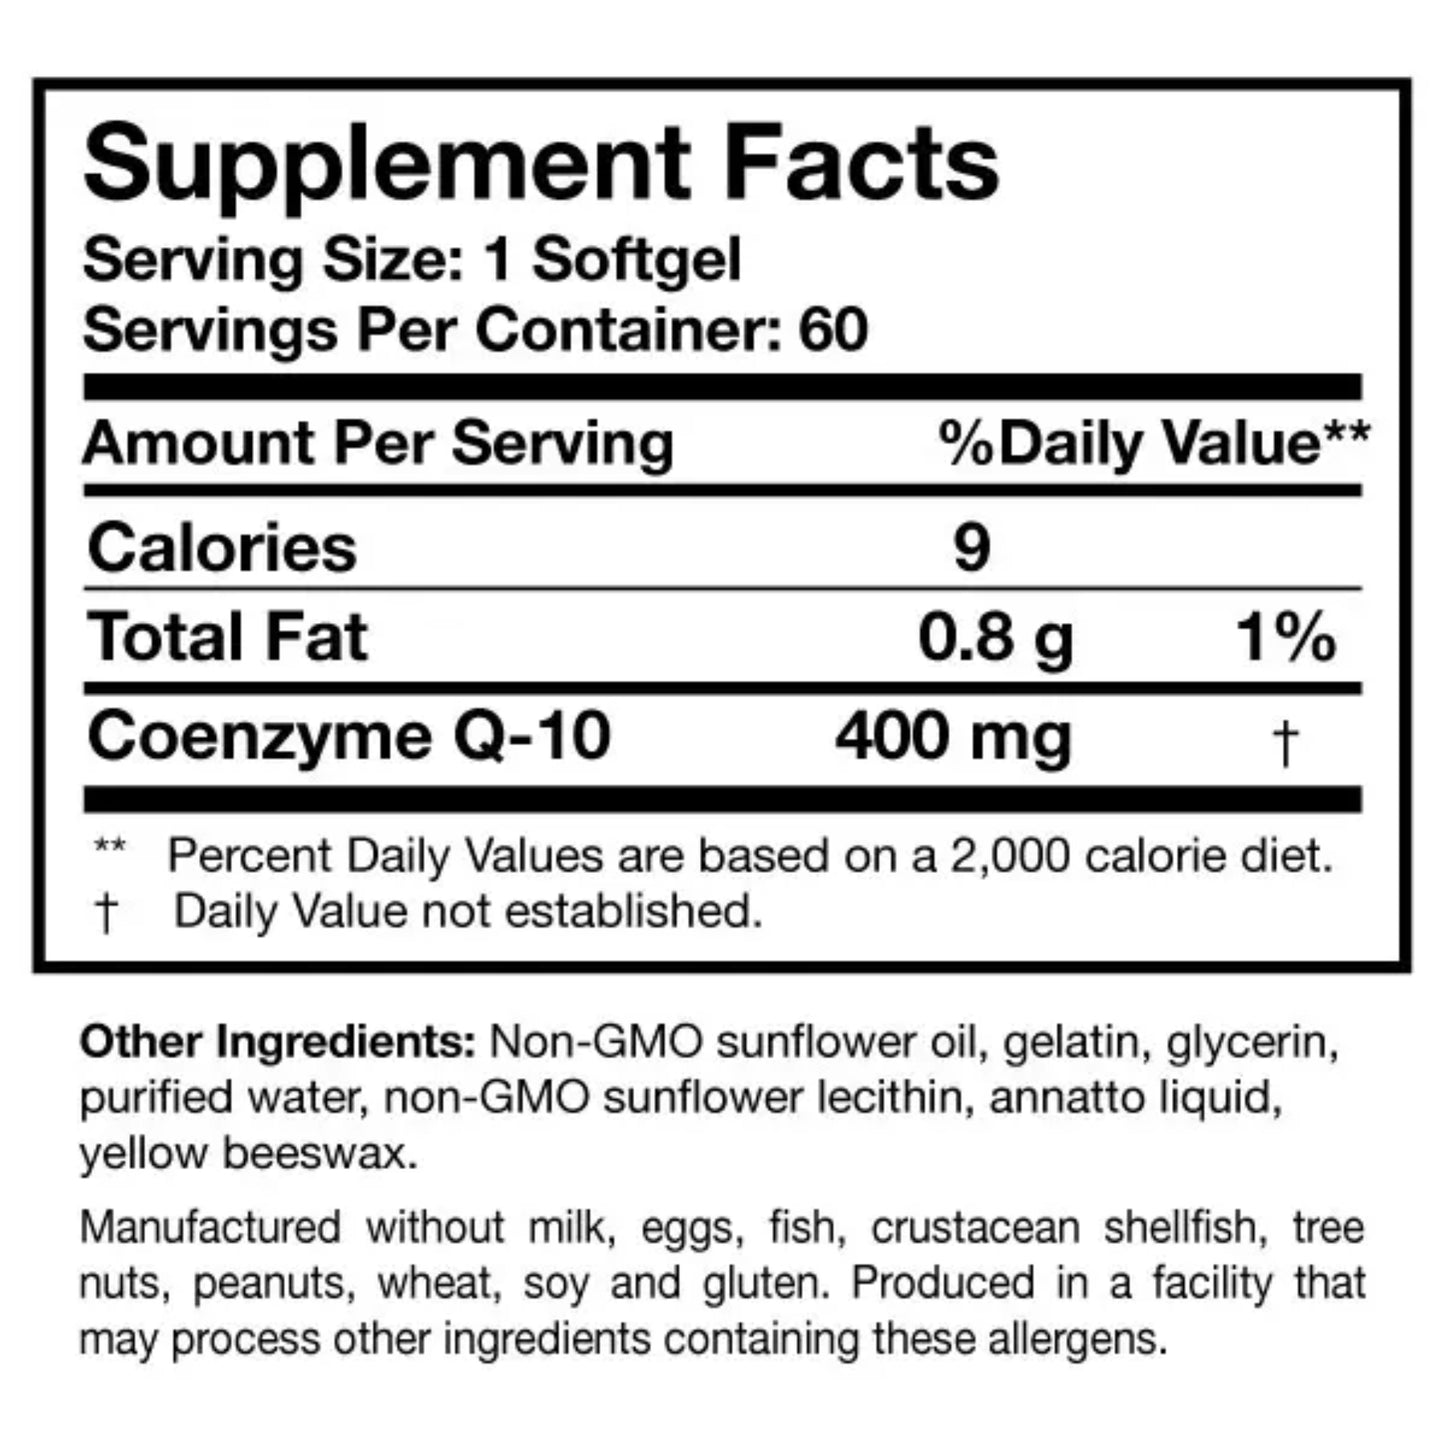 Researched Nutritionals - CoQ10 Powder 400mg, 60 caps